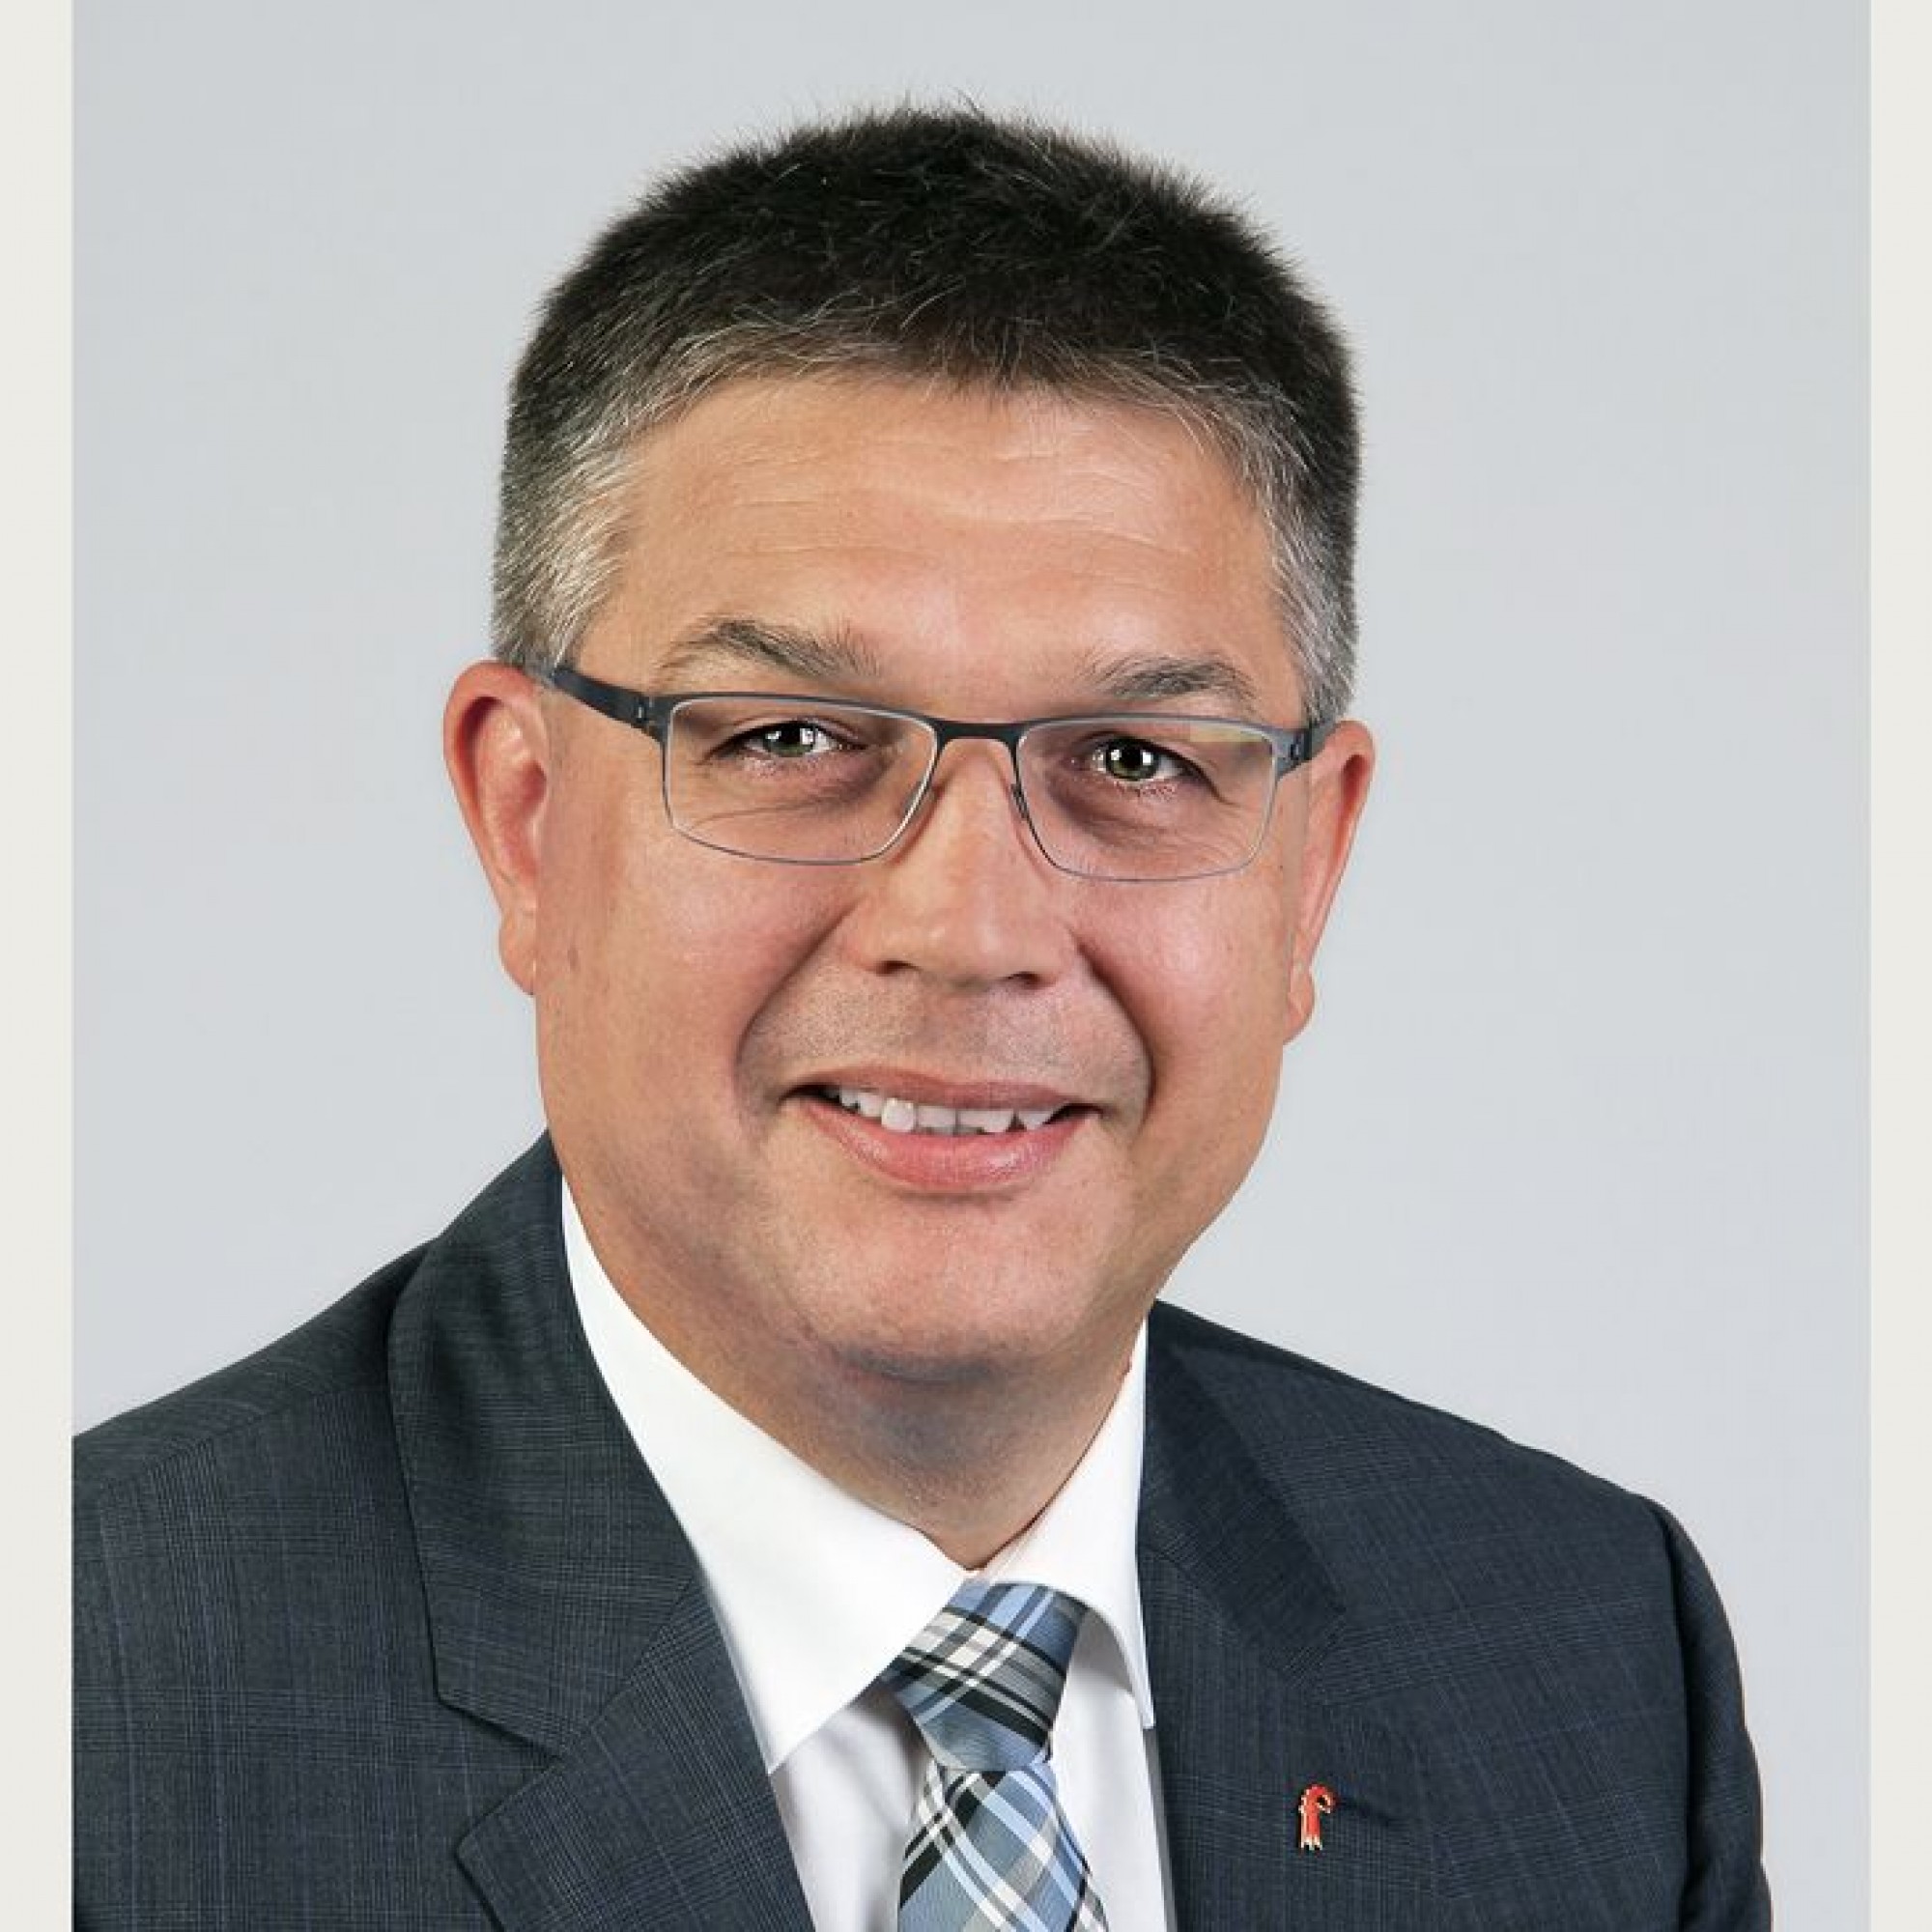 Markus Meier übernimmt ab dem Spätsommer das Amt des Direktors des HEV Schweiz.